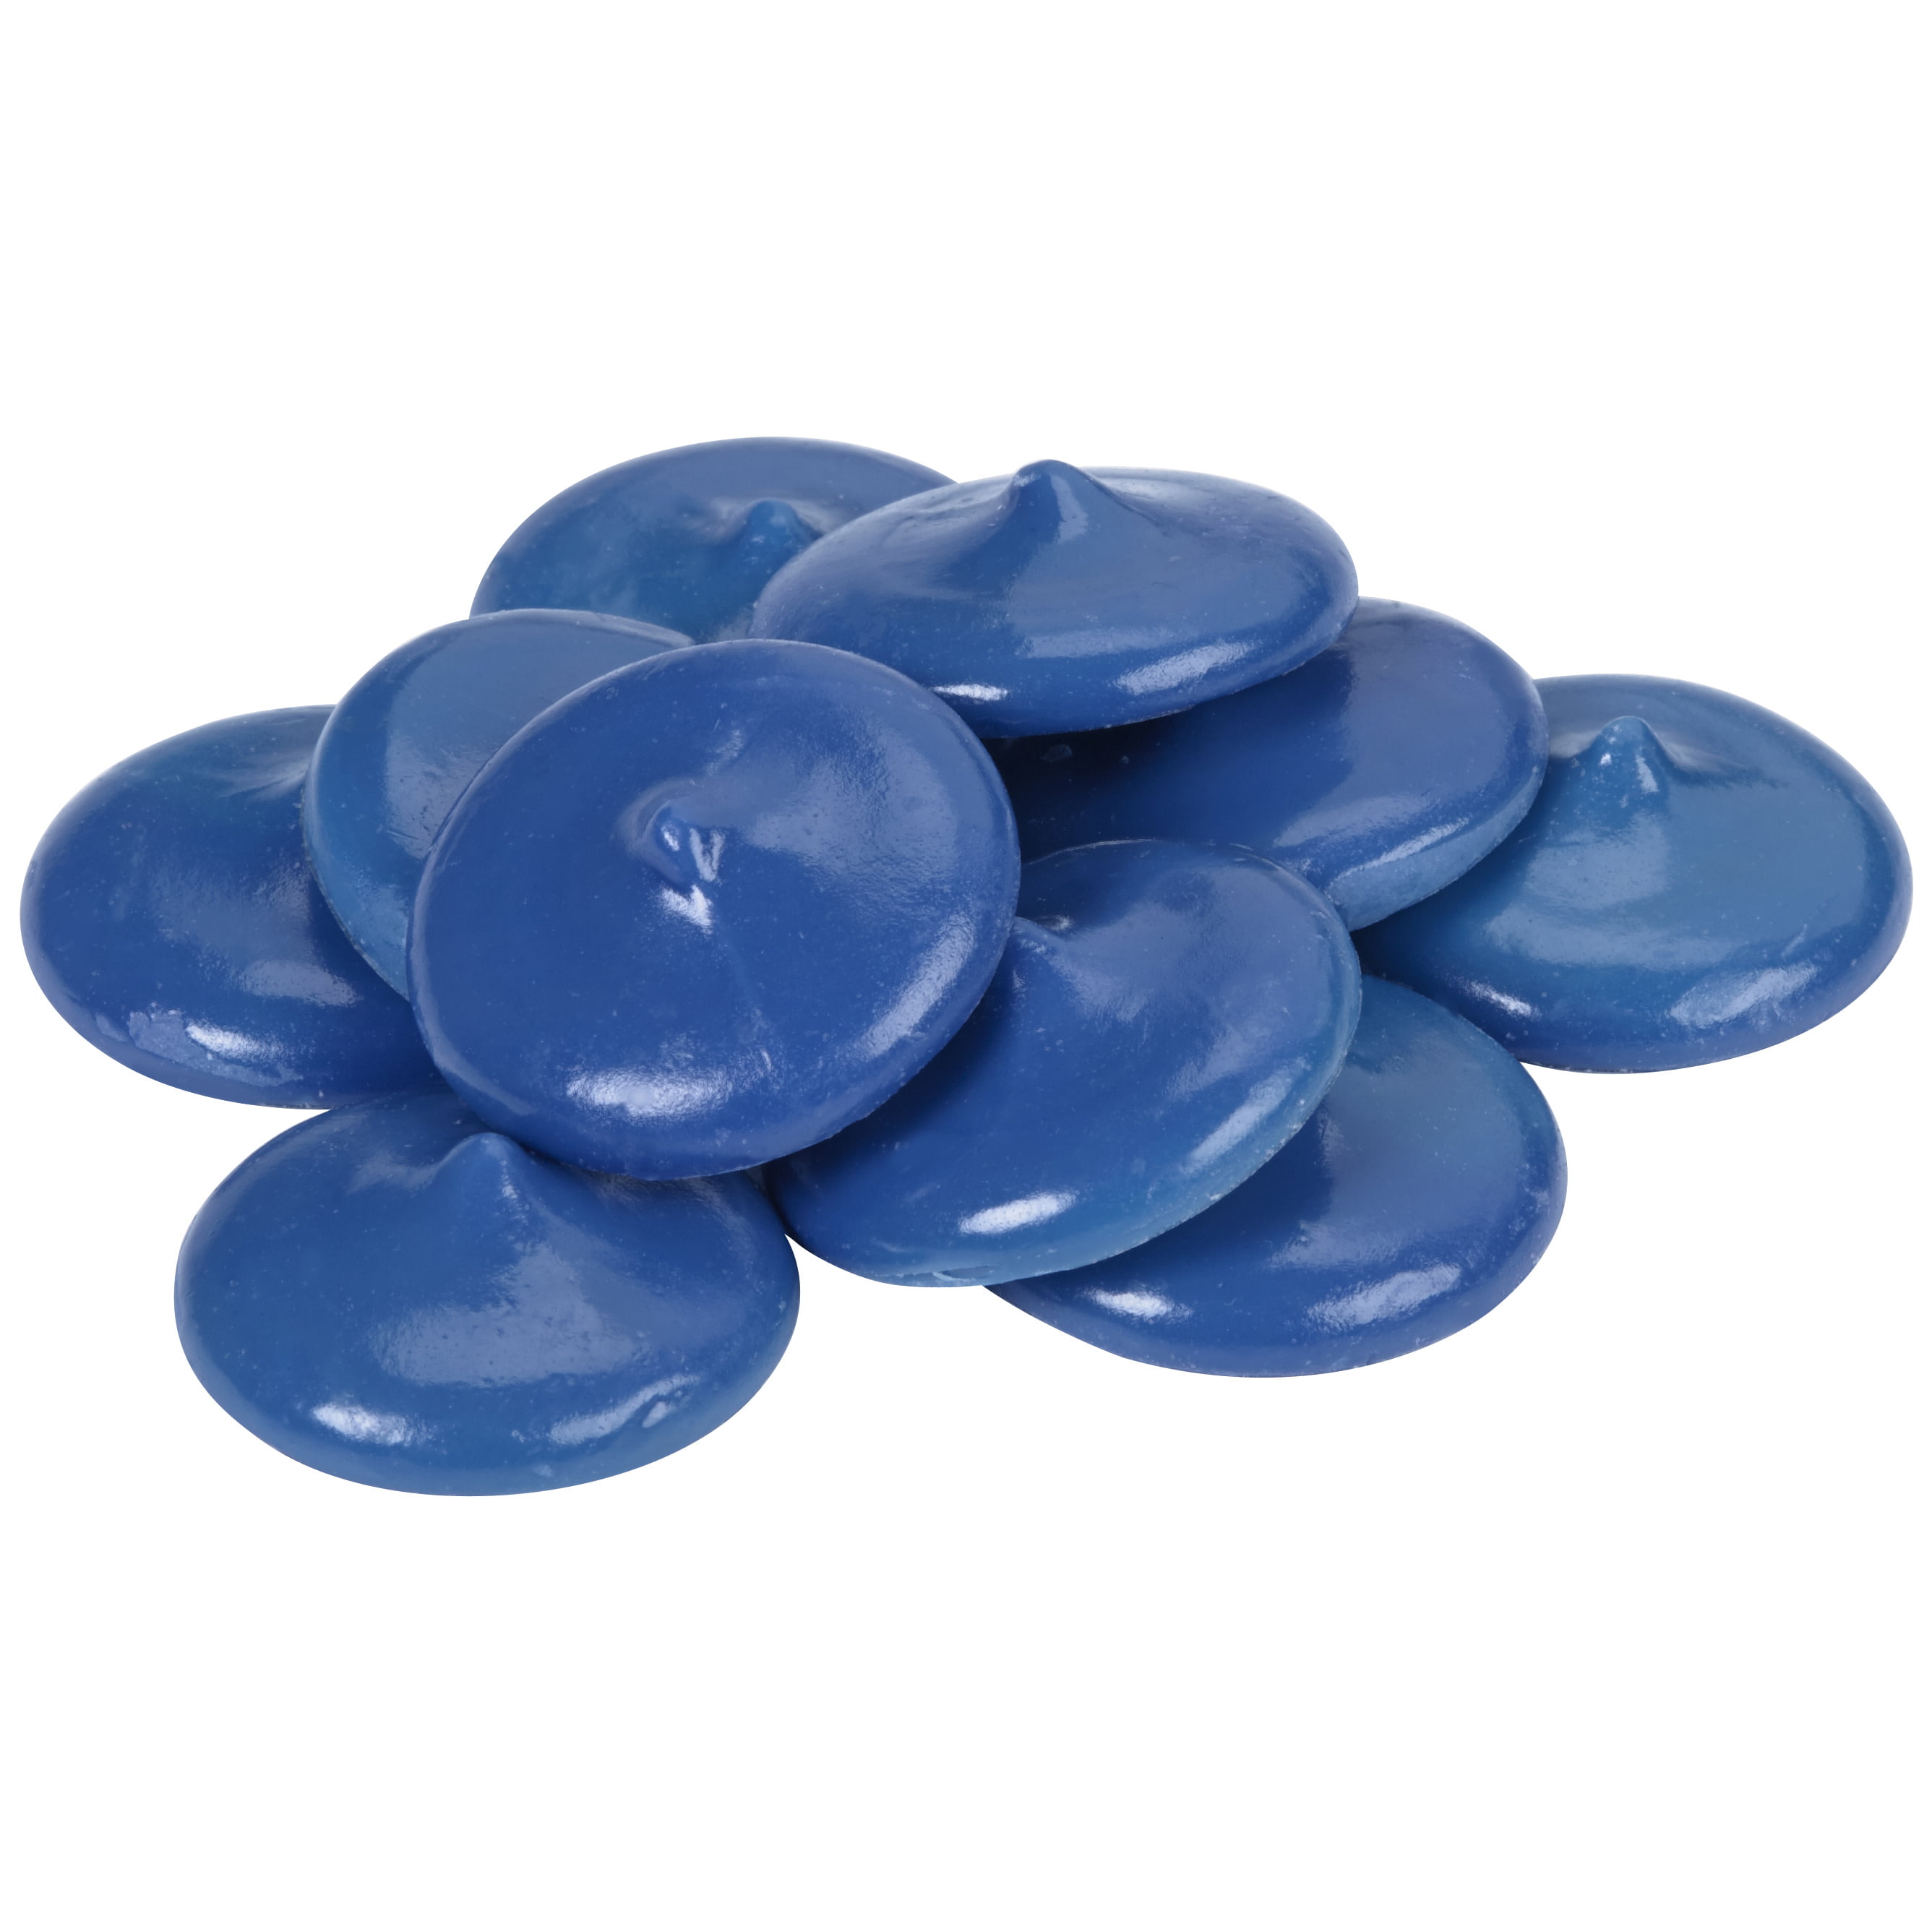 Candy Melts - Royal Blue: 12-Ounce Bag